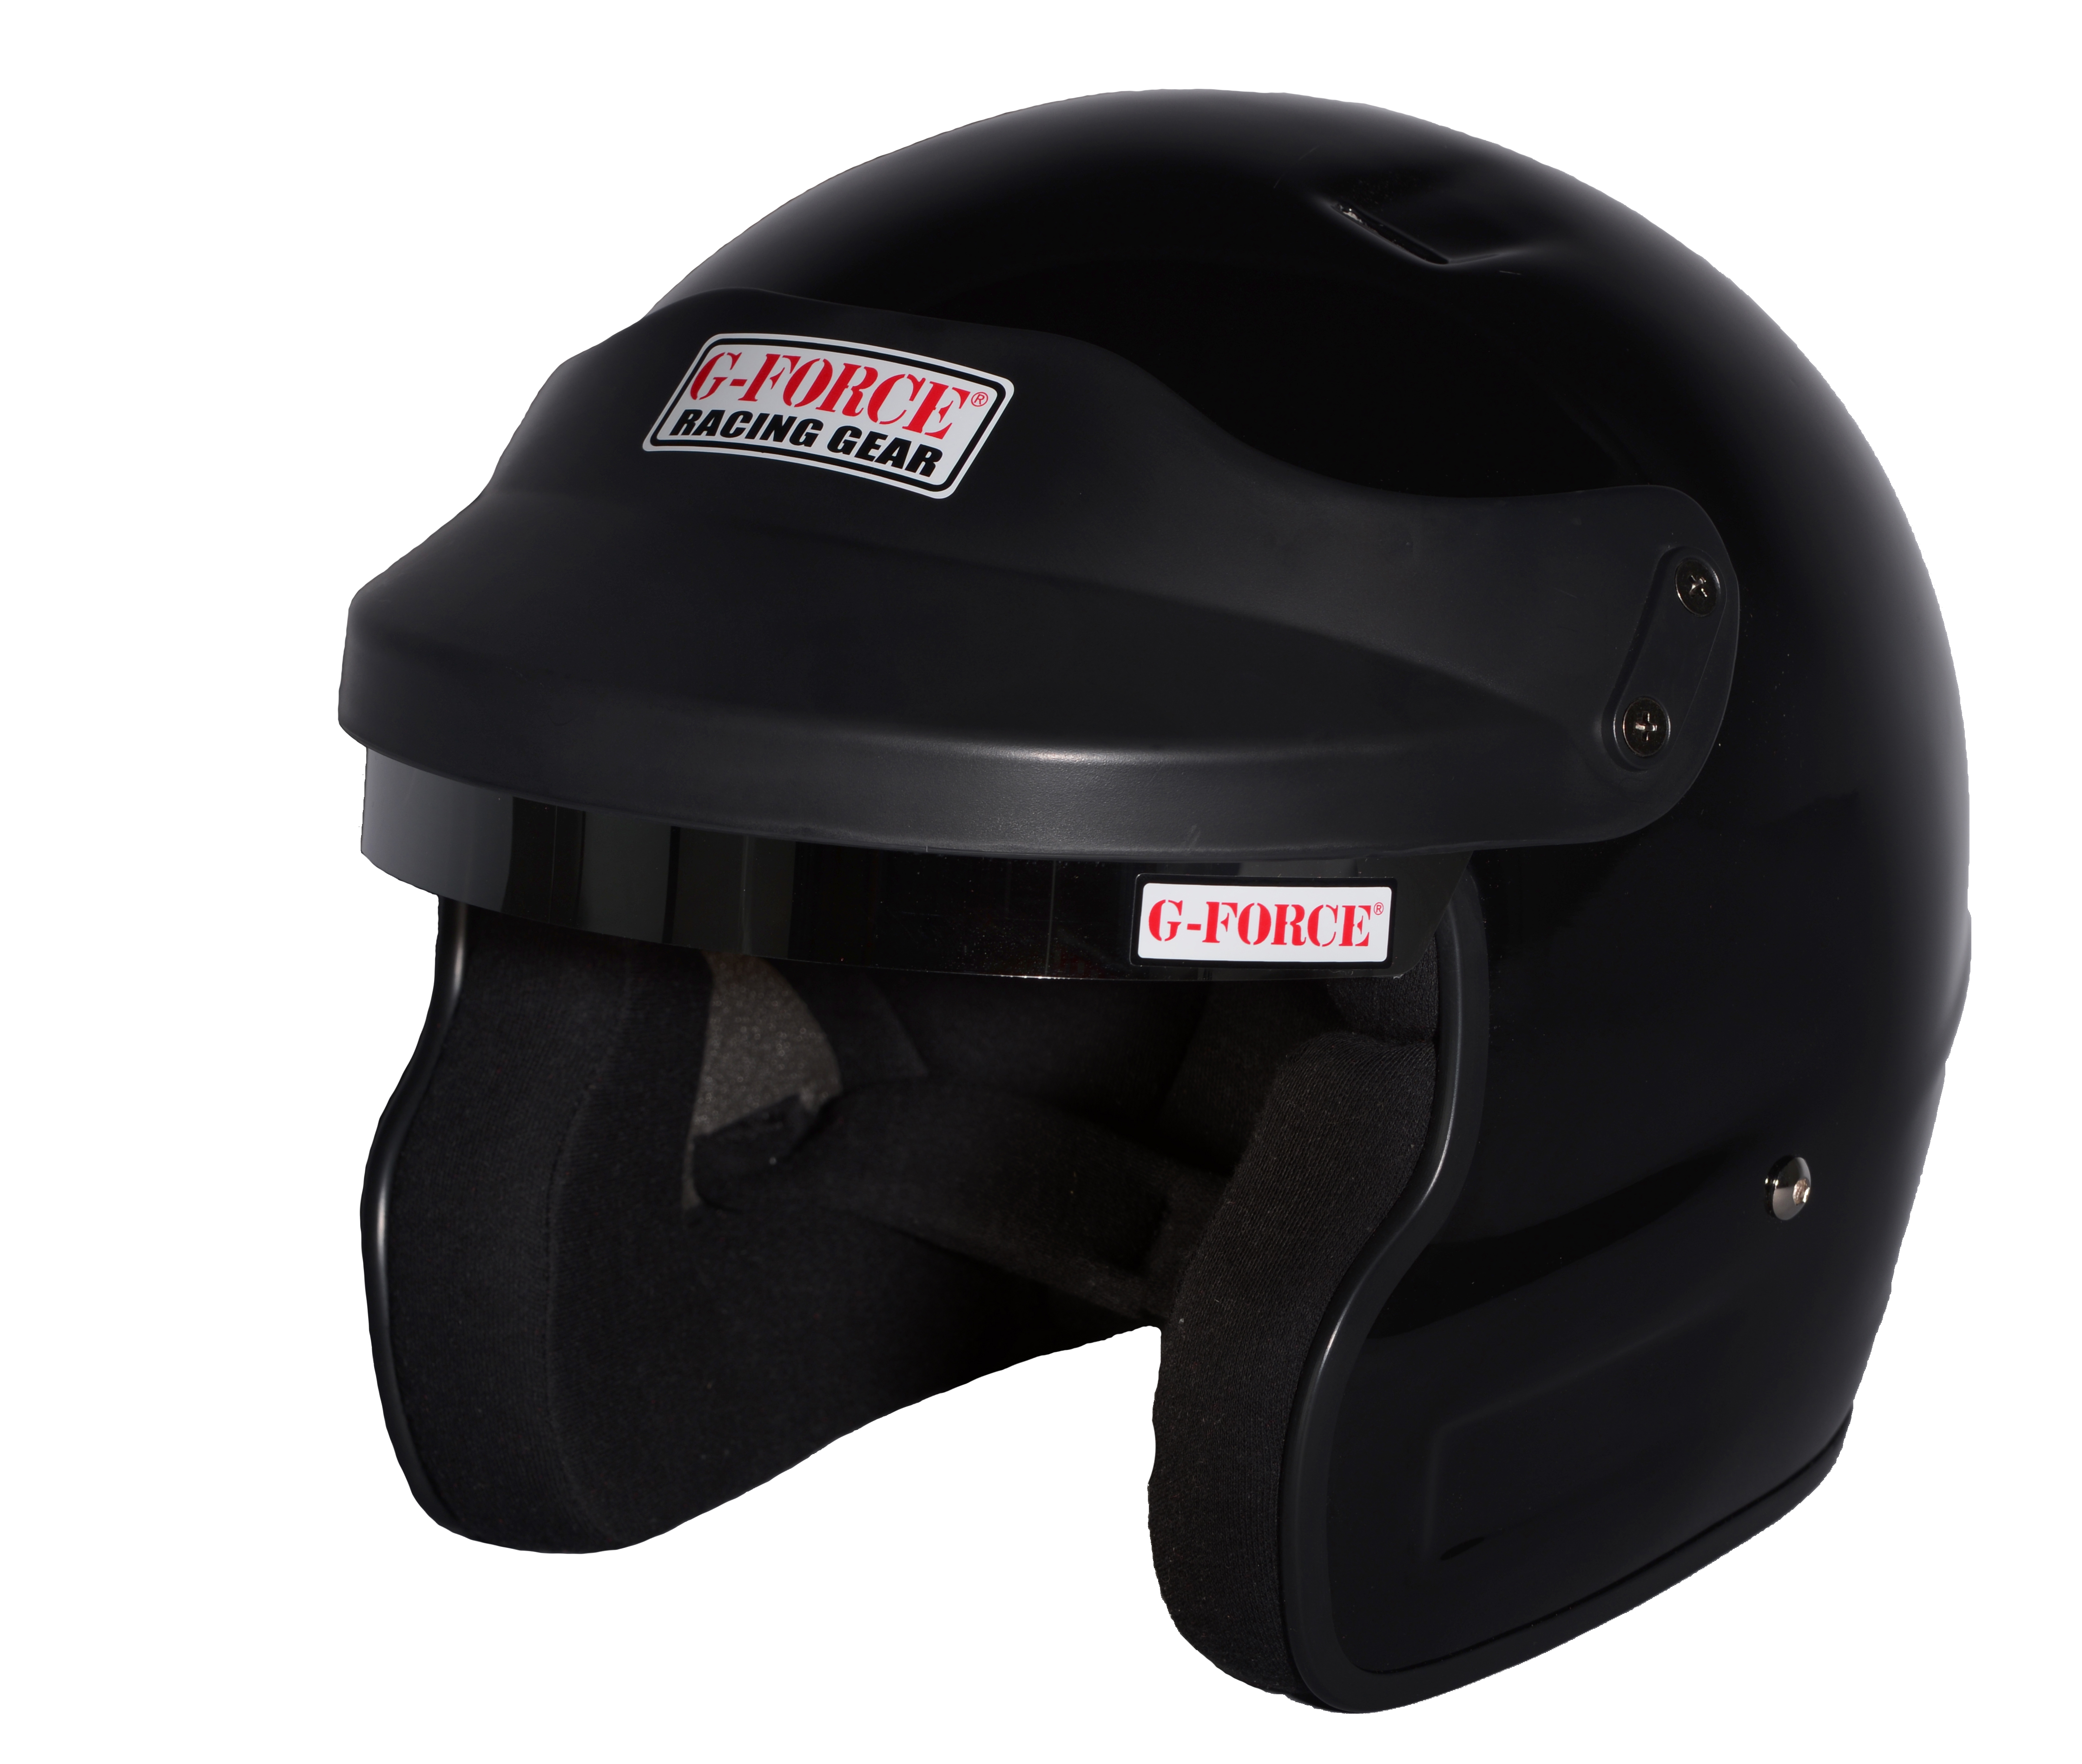 G-Force Racing Gear Helmet, PRO PHENOM SA2010 OPEN FACE LARGE BLACK